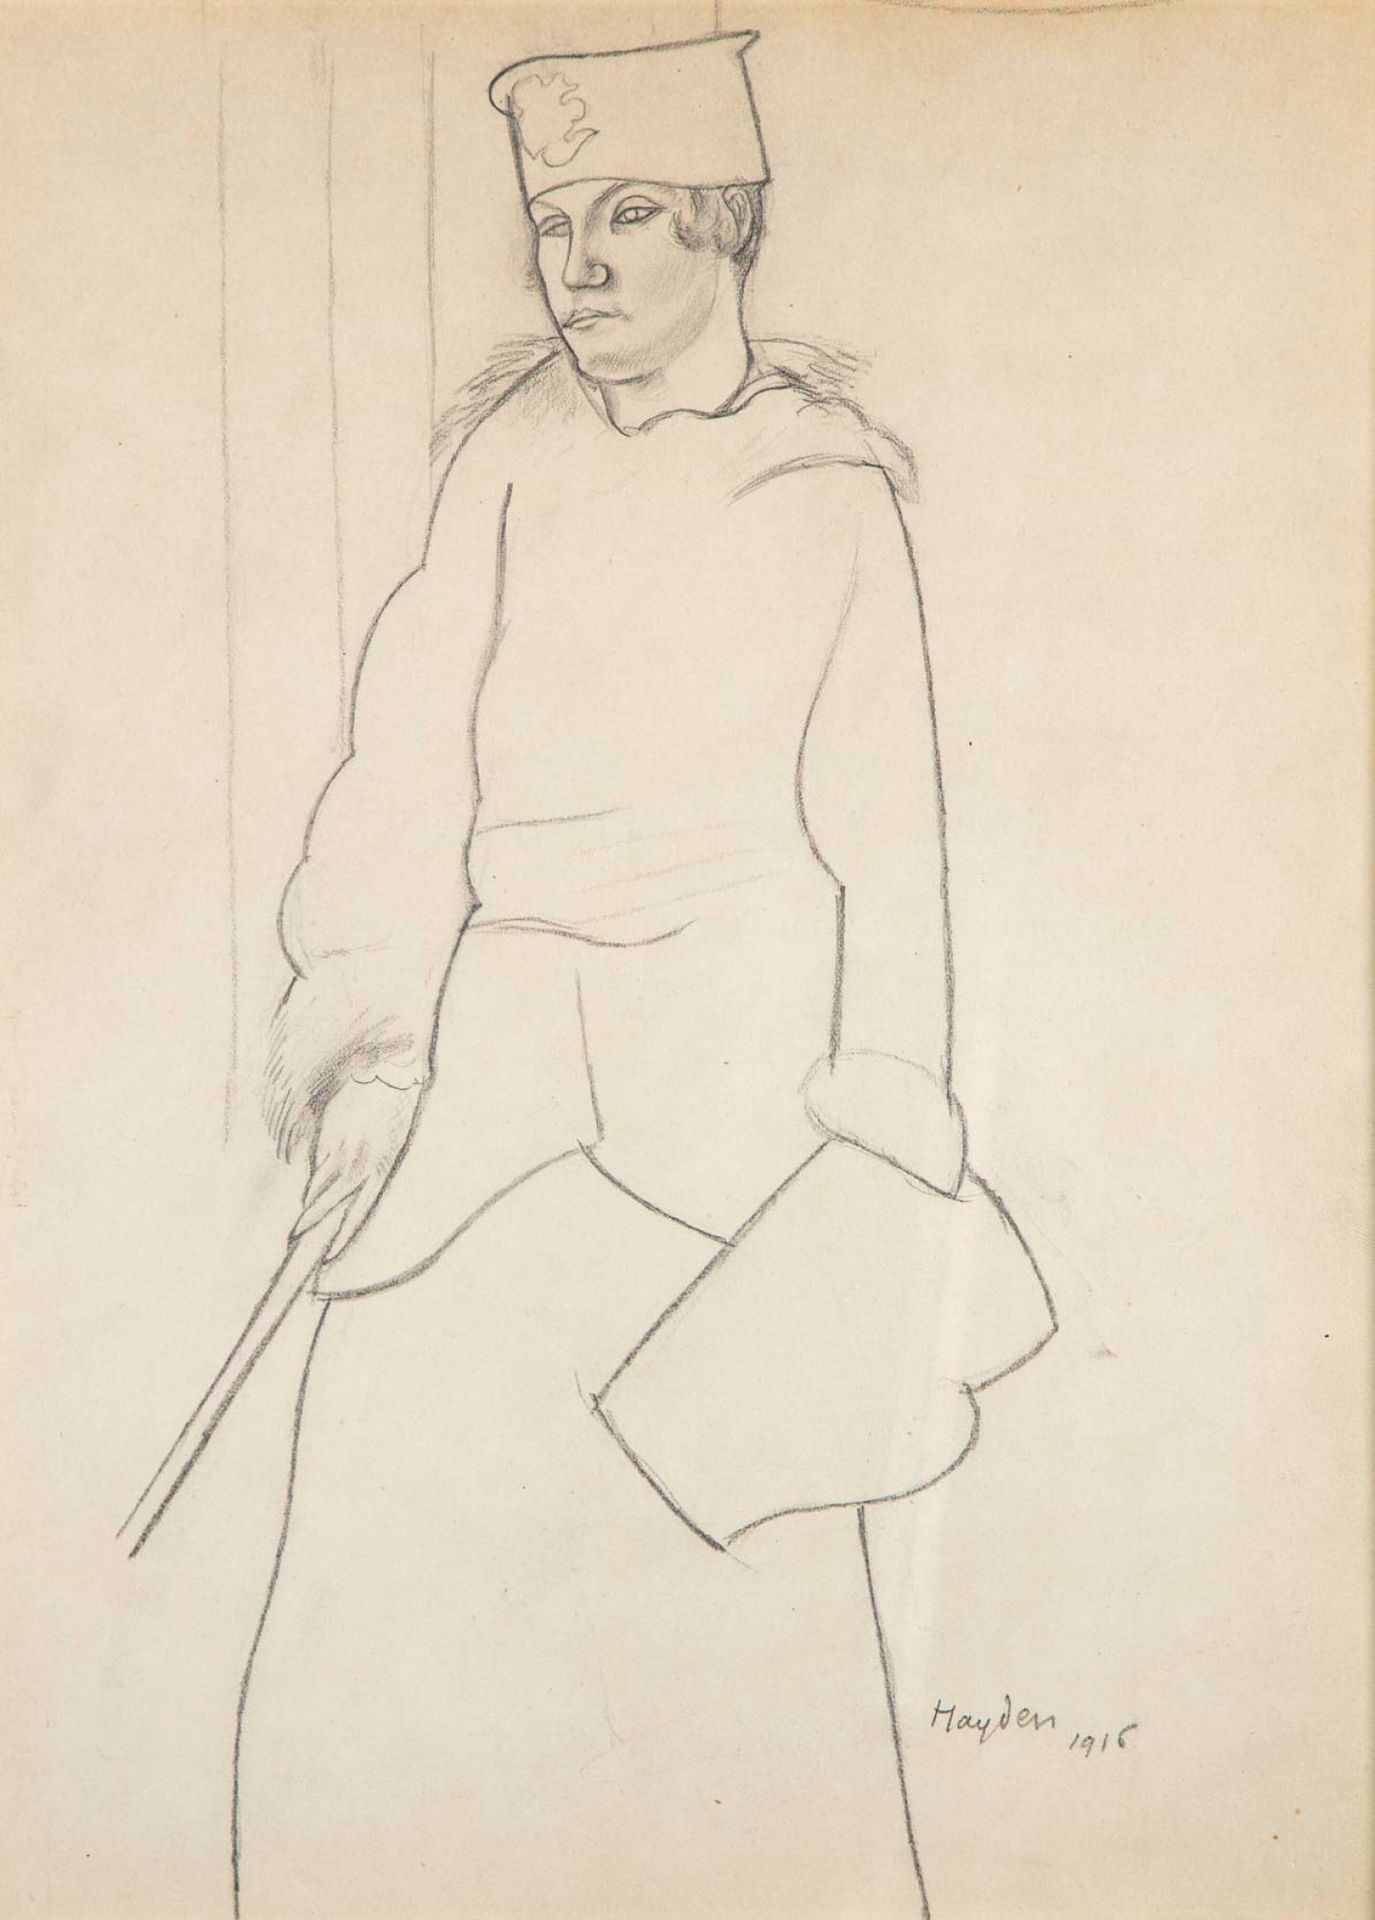 Henri HAYDEN Henri HAYDEN (1883-1970)

Mujer con manguito

Lápiz sobre papel.

F&hellip;